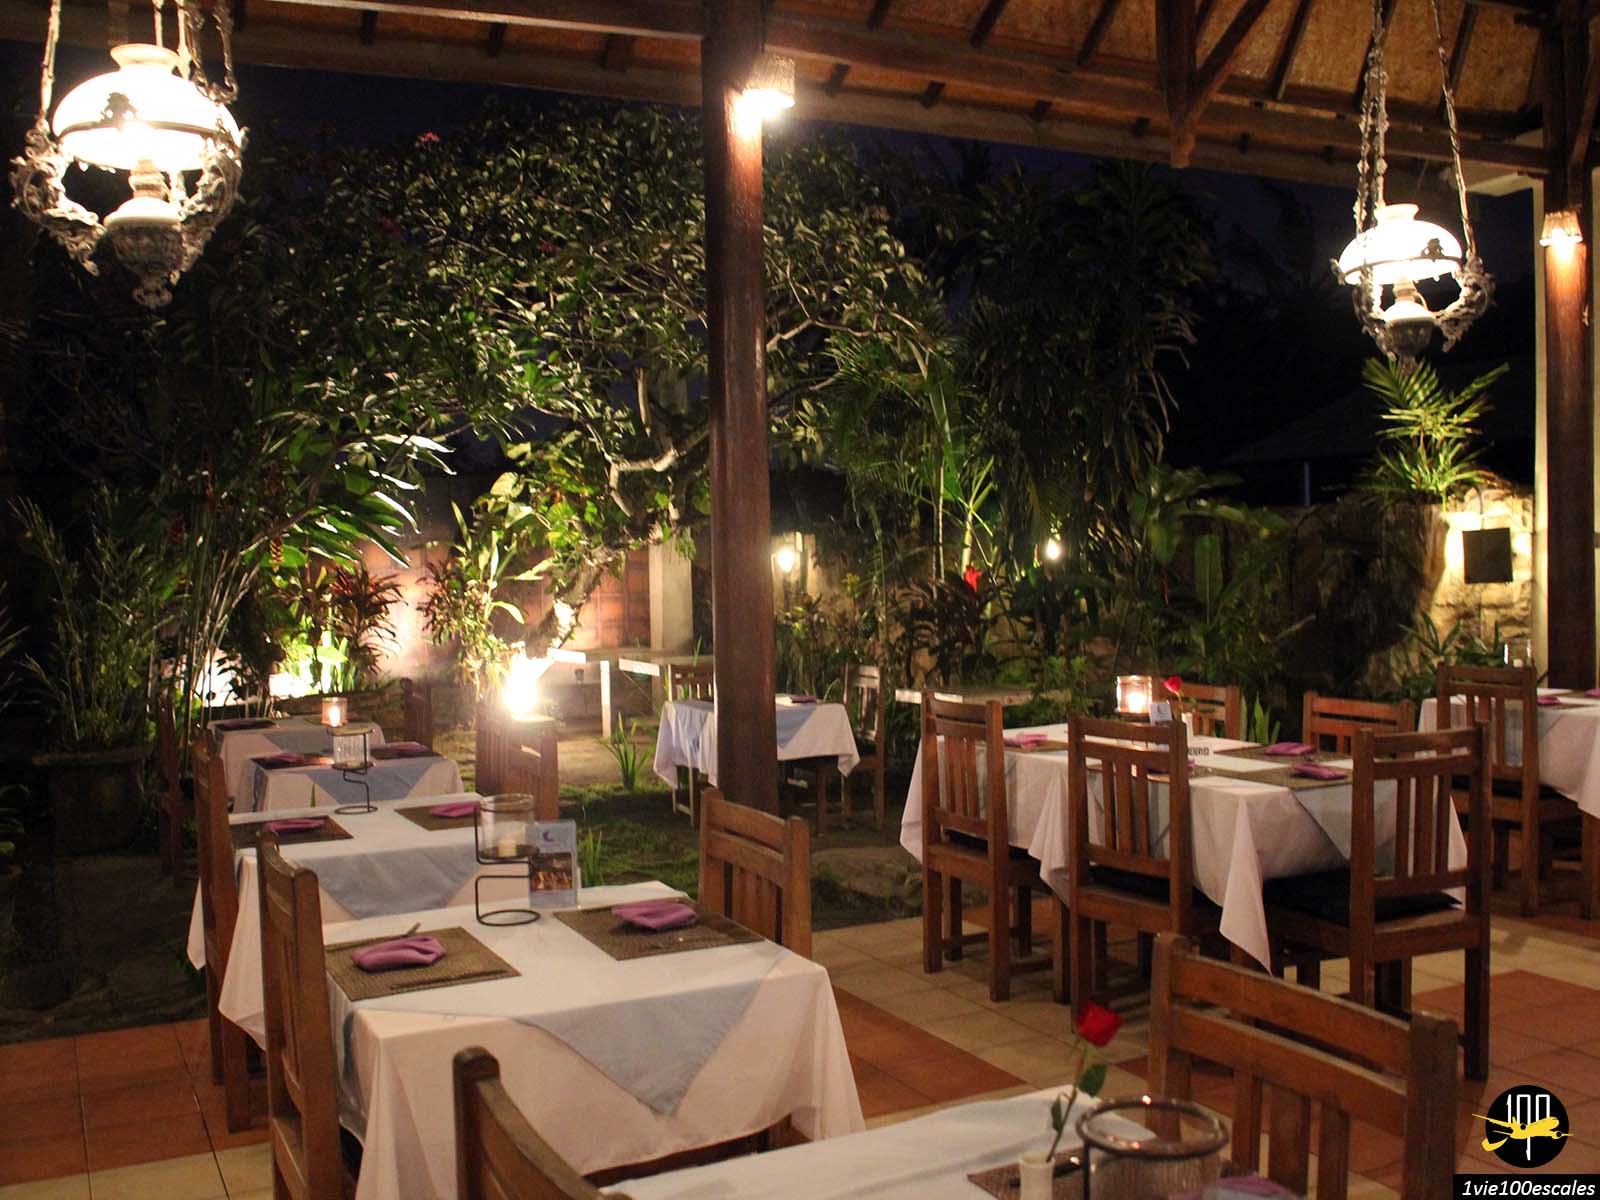 Les tables et les décorations du restaurant Nelayan Seafood de Tanjung Benoa à Bali